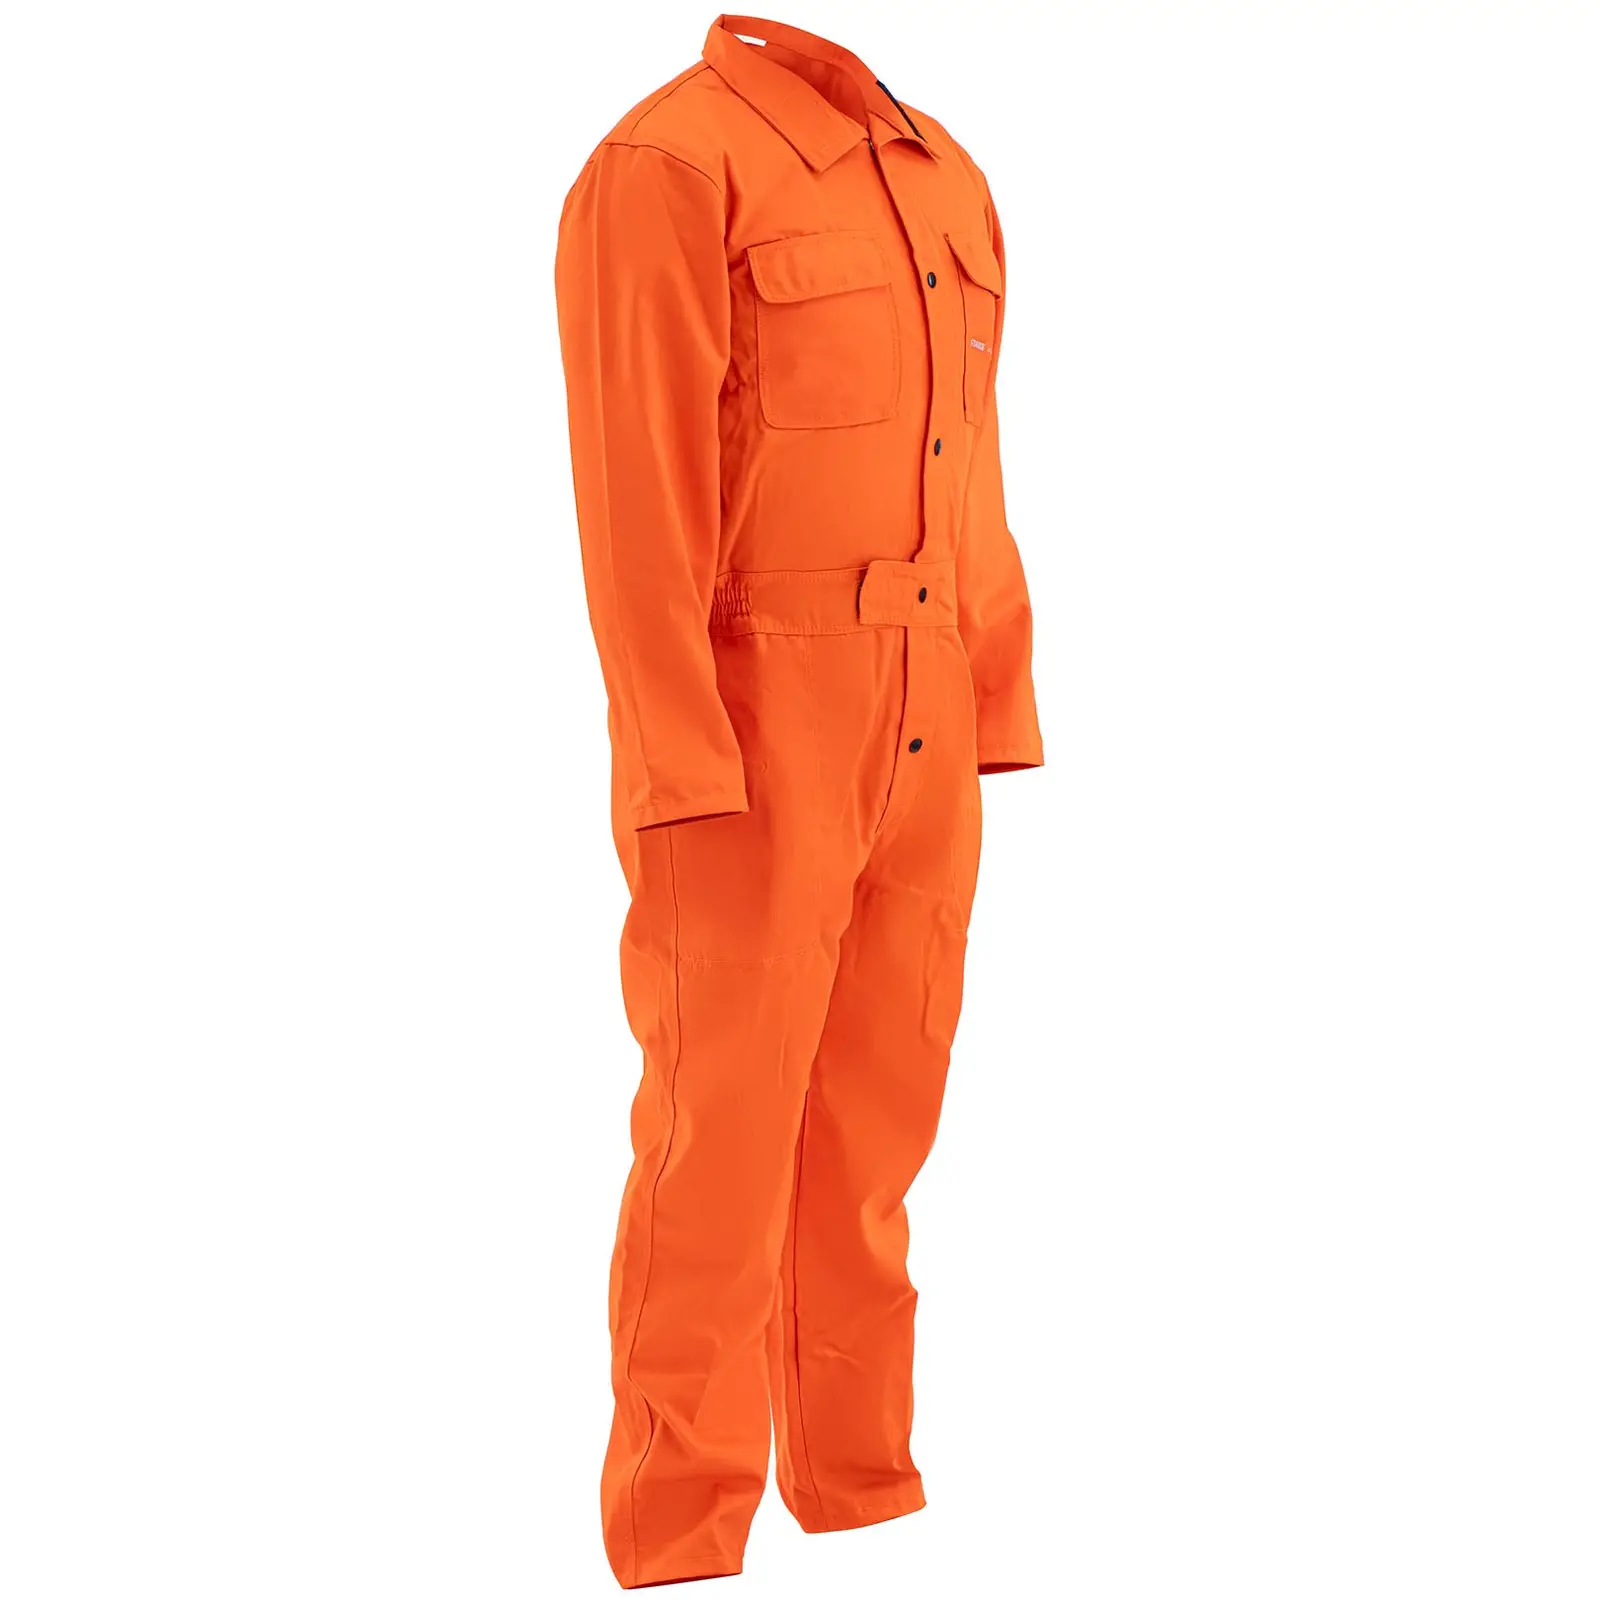 Welding Overalls Coverall Orange Size L